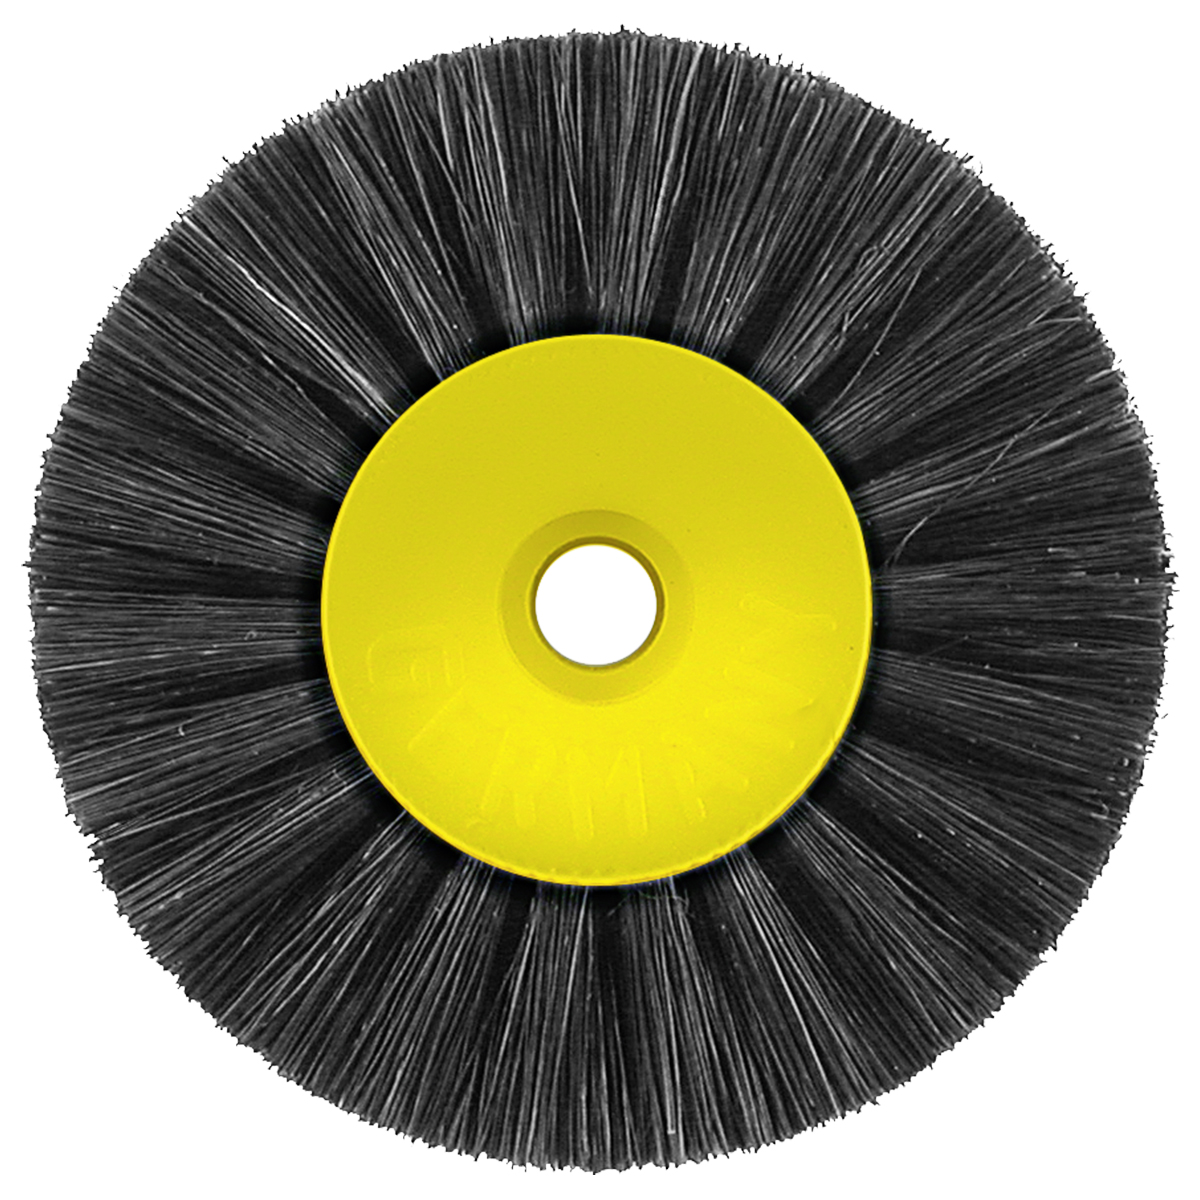 HoPla Circular brush bristles black 55 mm with plastic centre